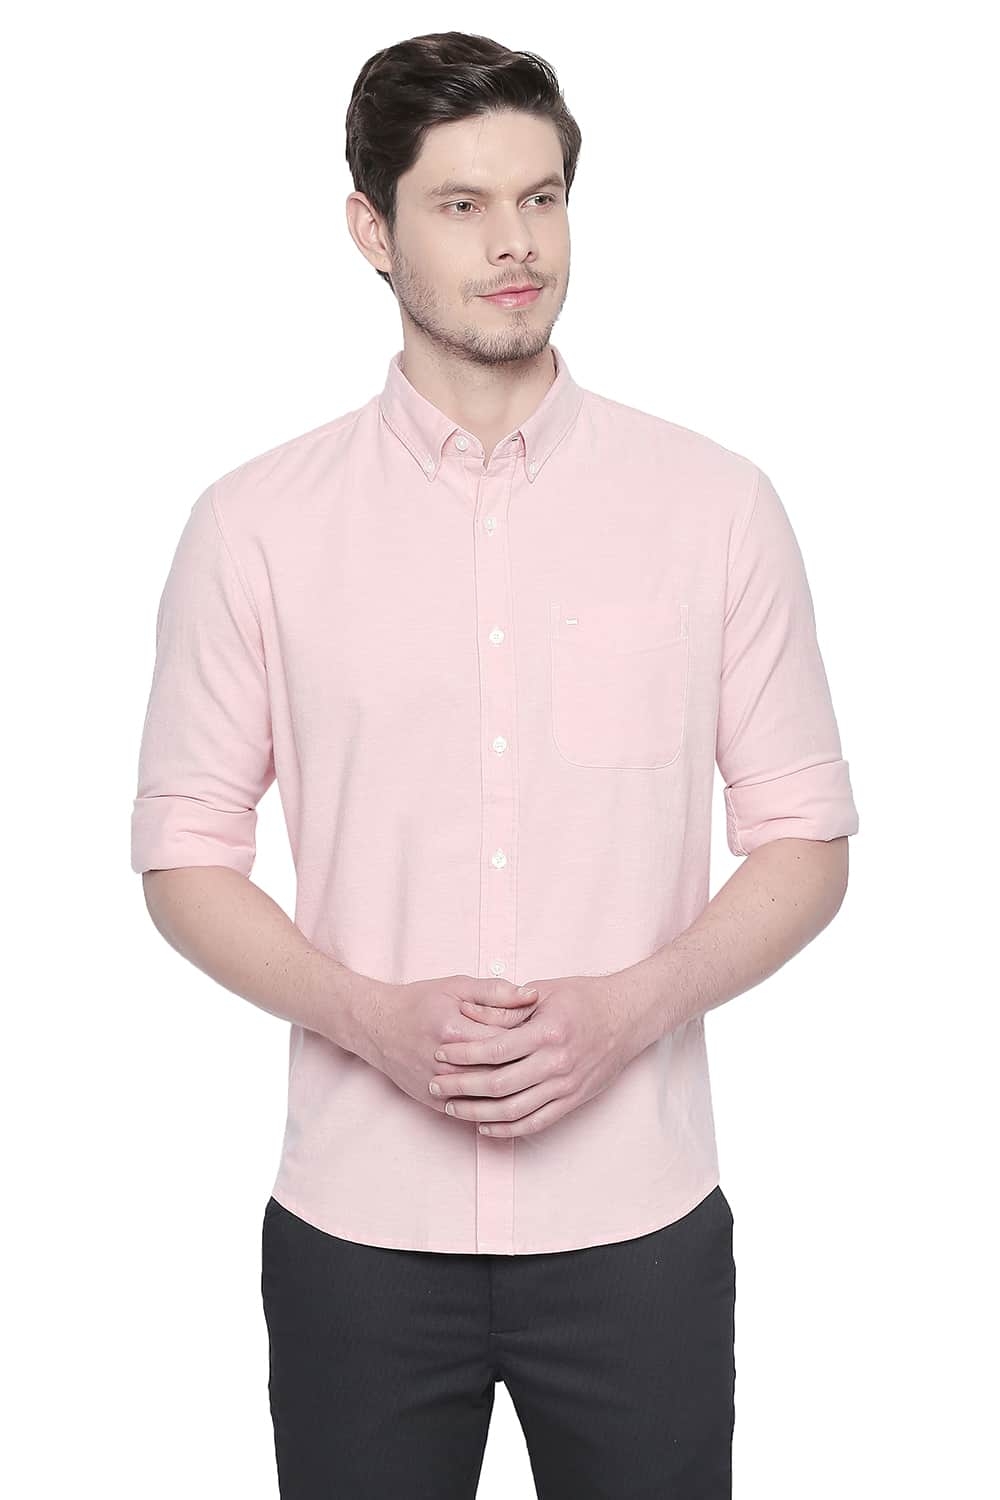 Basics | Basics Slim Fit Cloud Pink Oxford Stretch Shirt